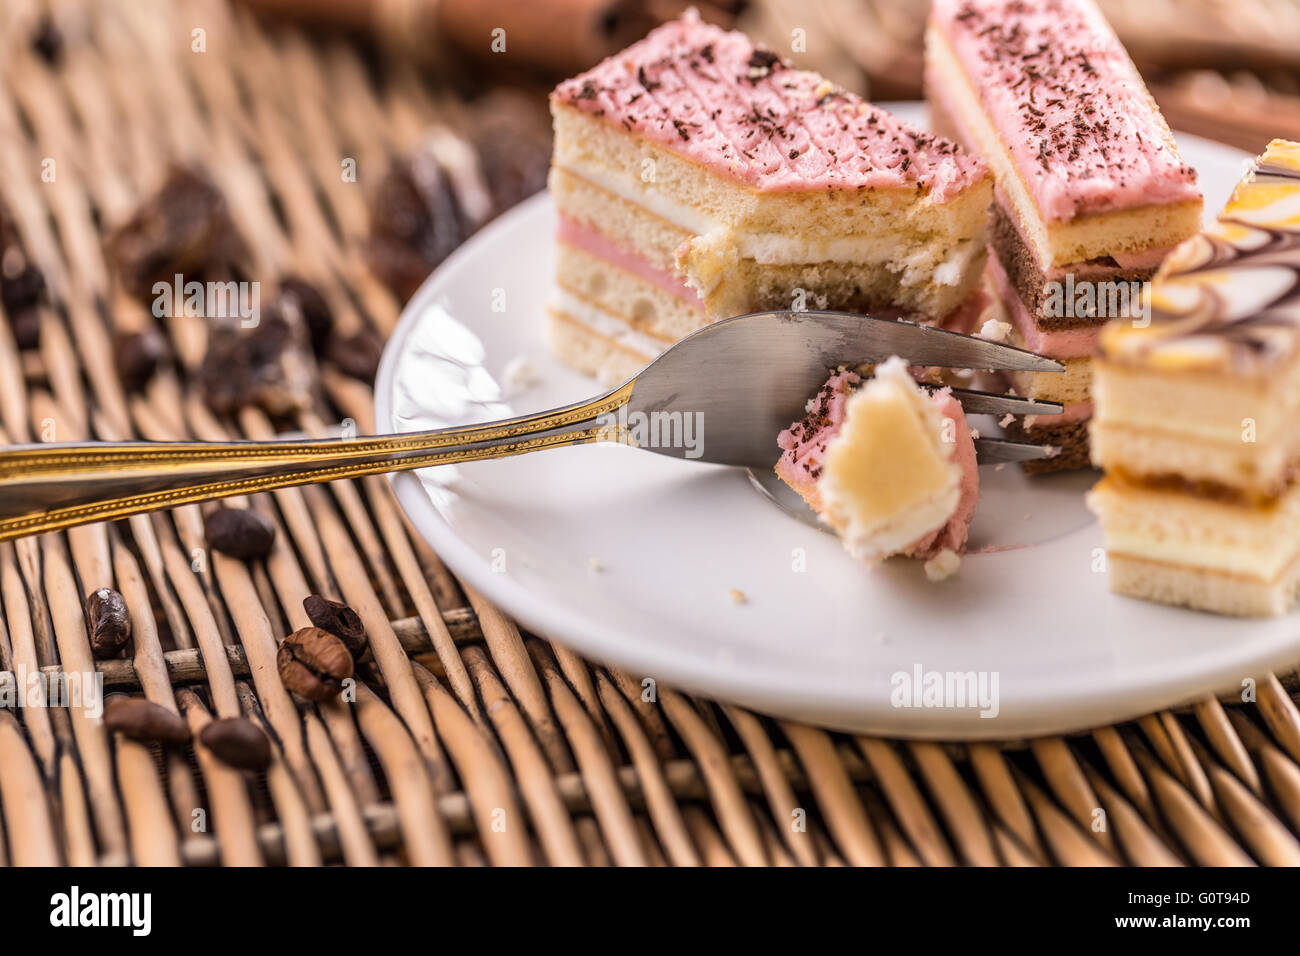 Decorative layered desserts on white plate Stock Photo